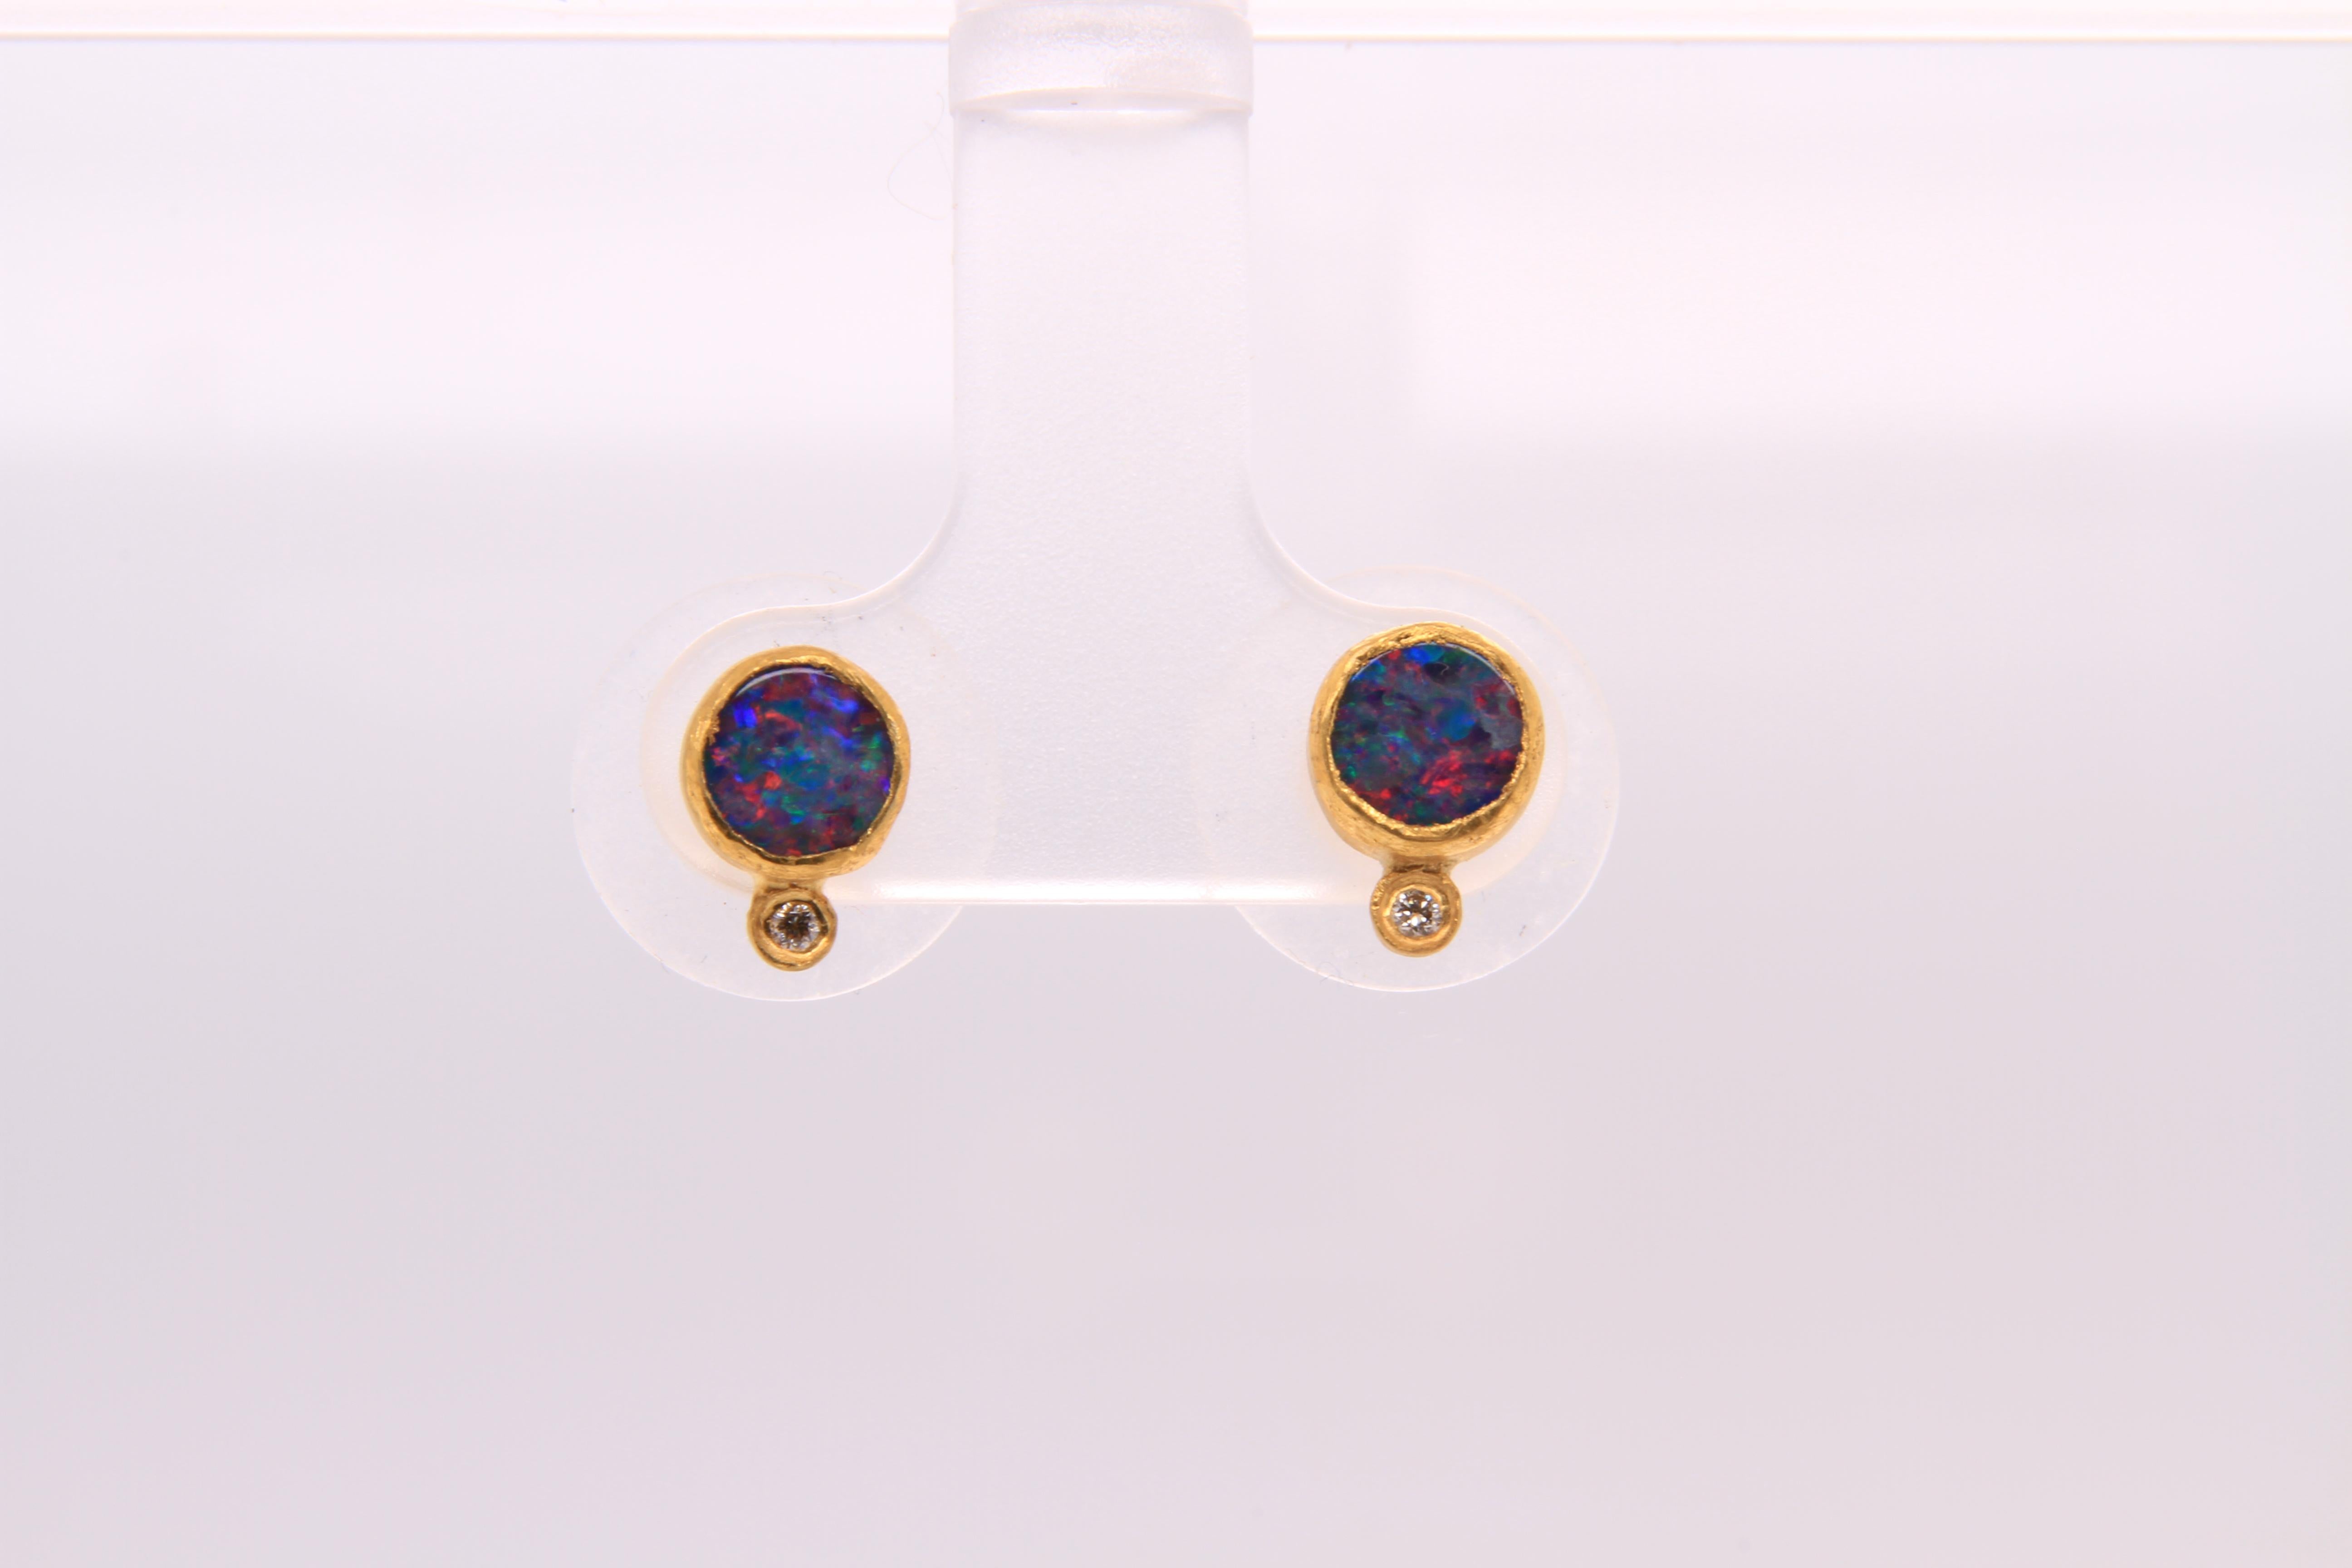 Bright Rainbow Opal Stud Earrings with Diamonds, Solid 24K by Kurtulan 3